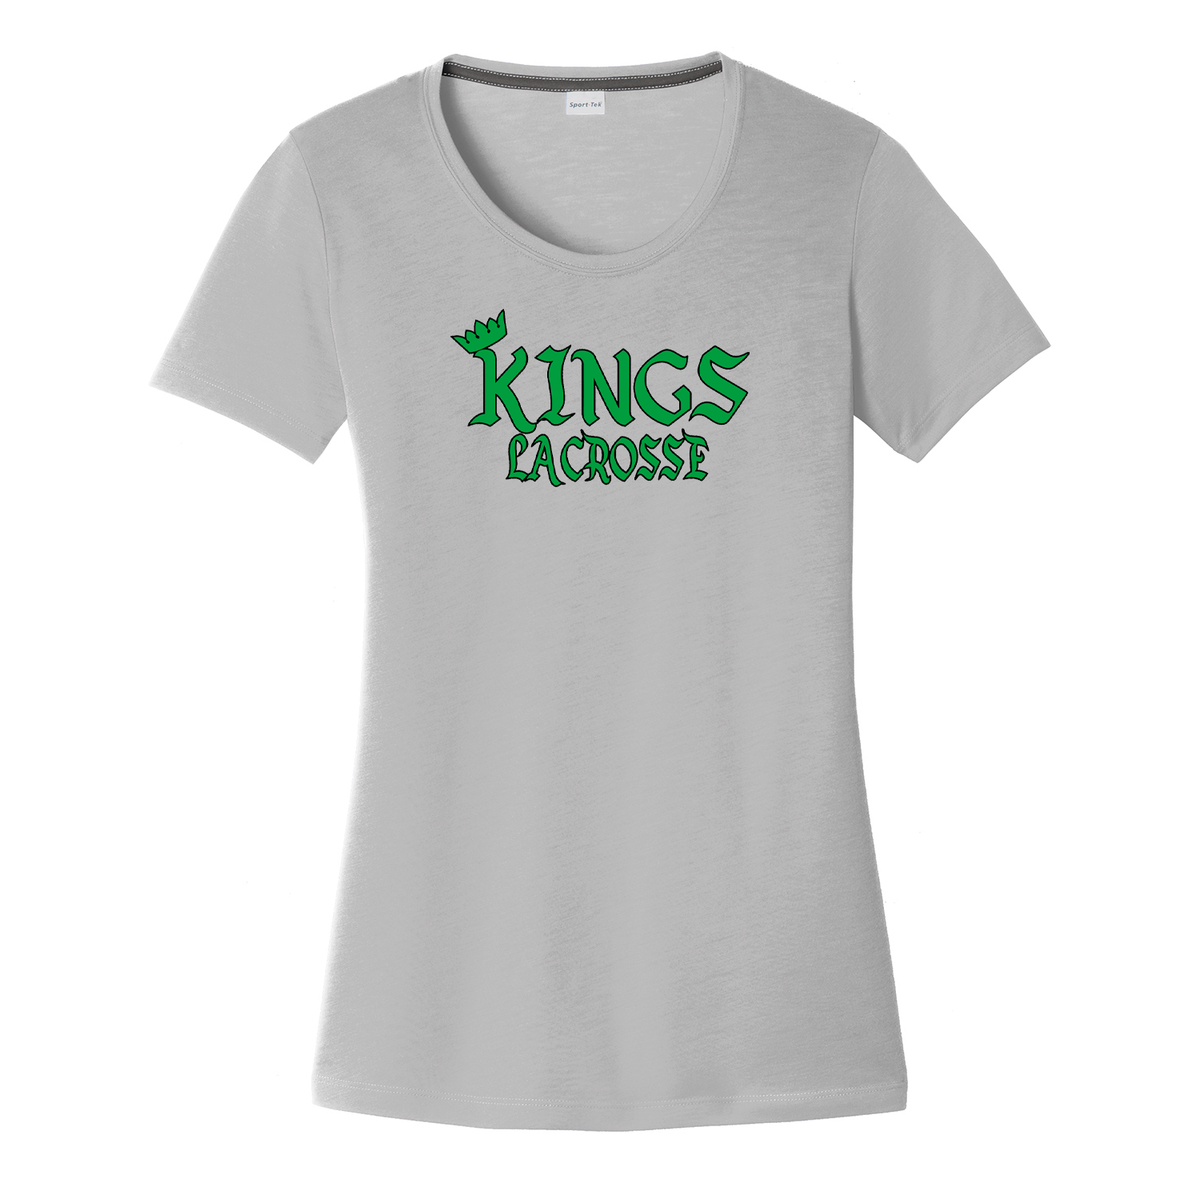 Atlanta Kings Lacrosse Women's CottonTouch Performance T-Shirt